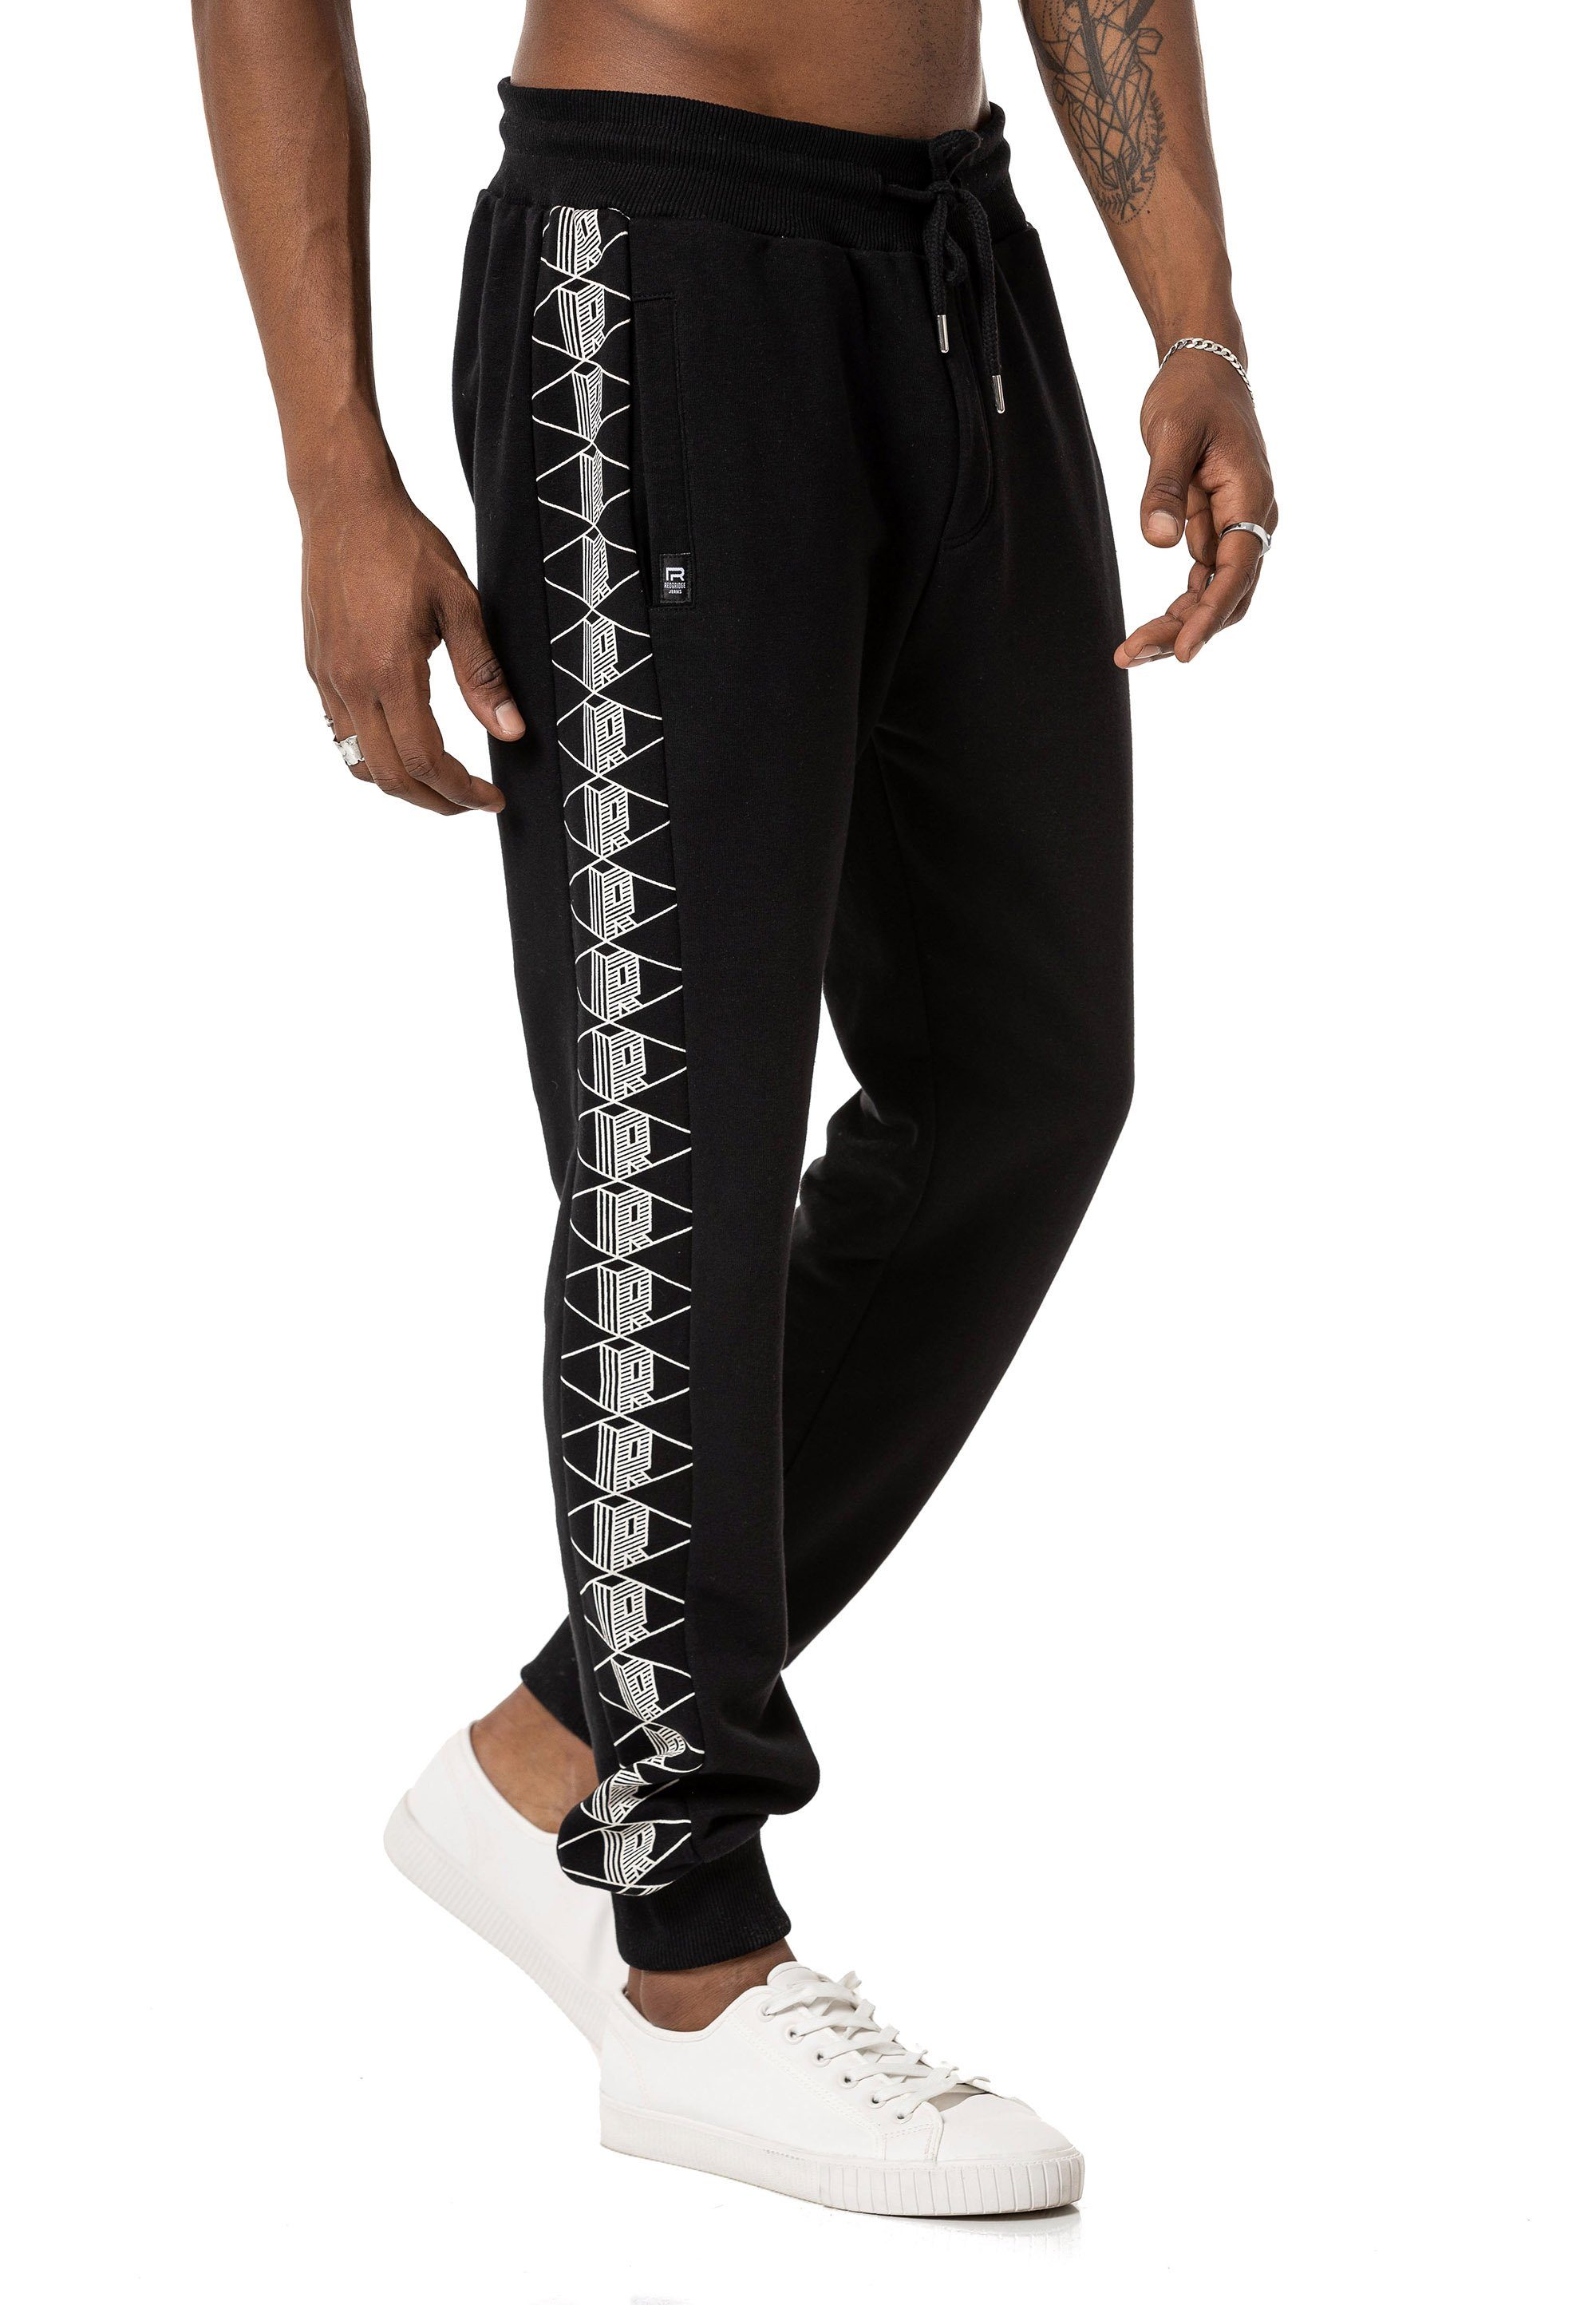 RedBridge Jogginghose Sweatpants mit seitlichem 3D Print Premium Qualität Schwarz